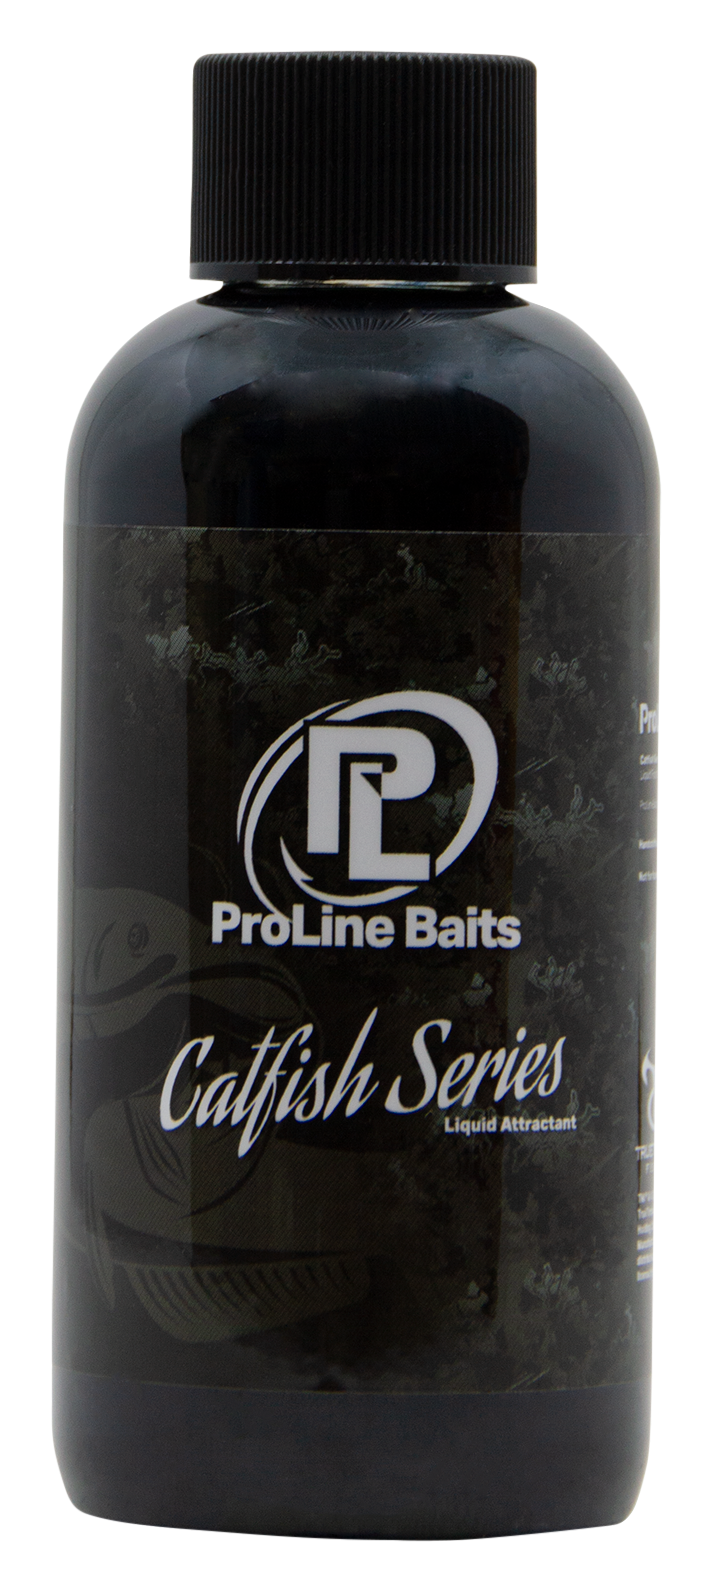 Proline Baits Catfish Series Fish Attractant - Natural Shad